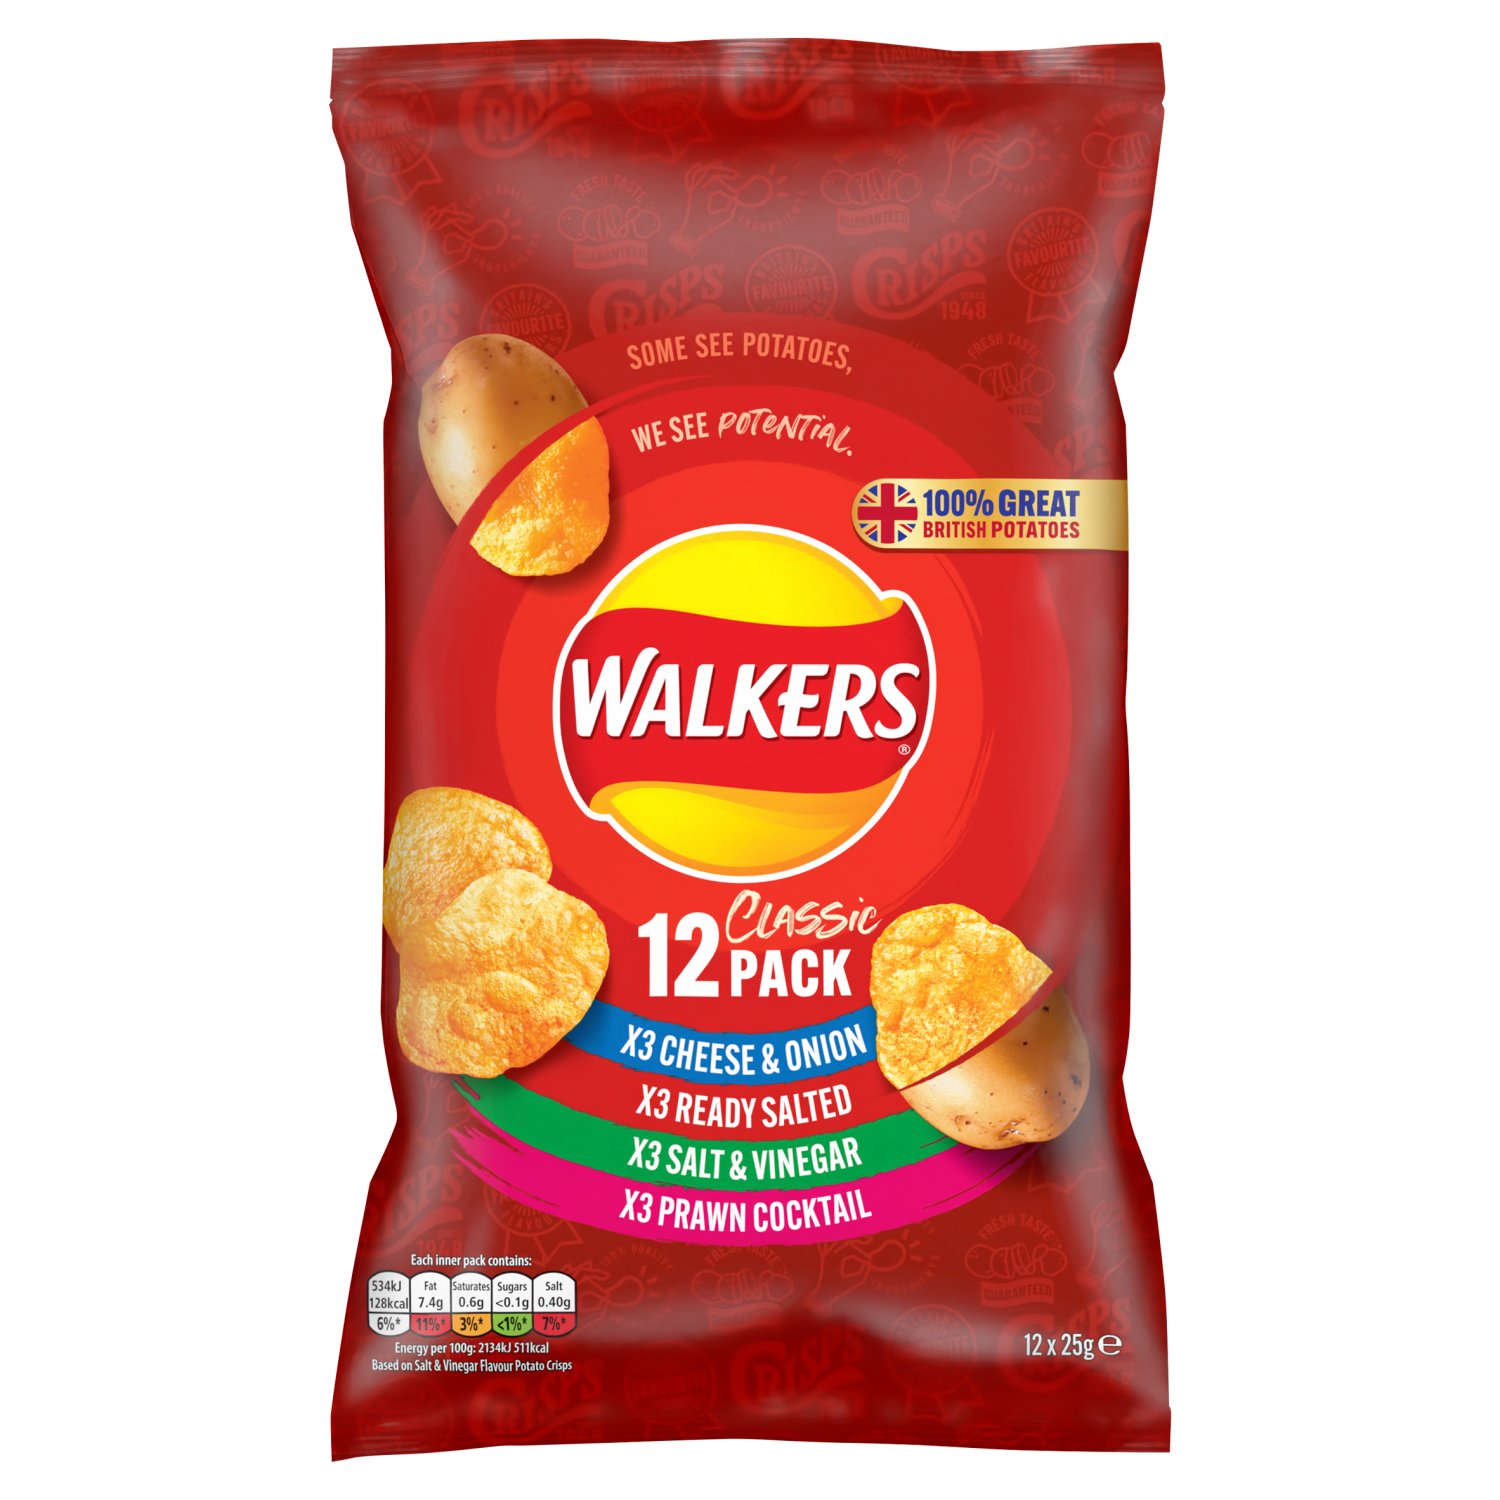 Walkers Variety Crisps 14 Pack (25 g)